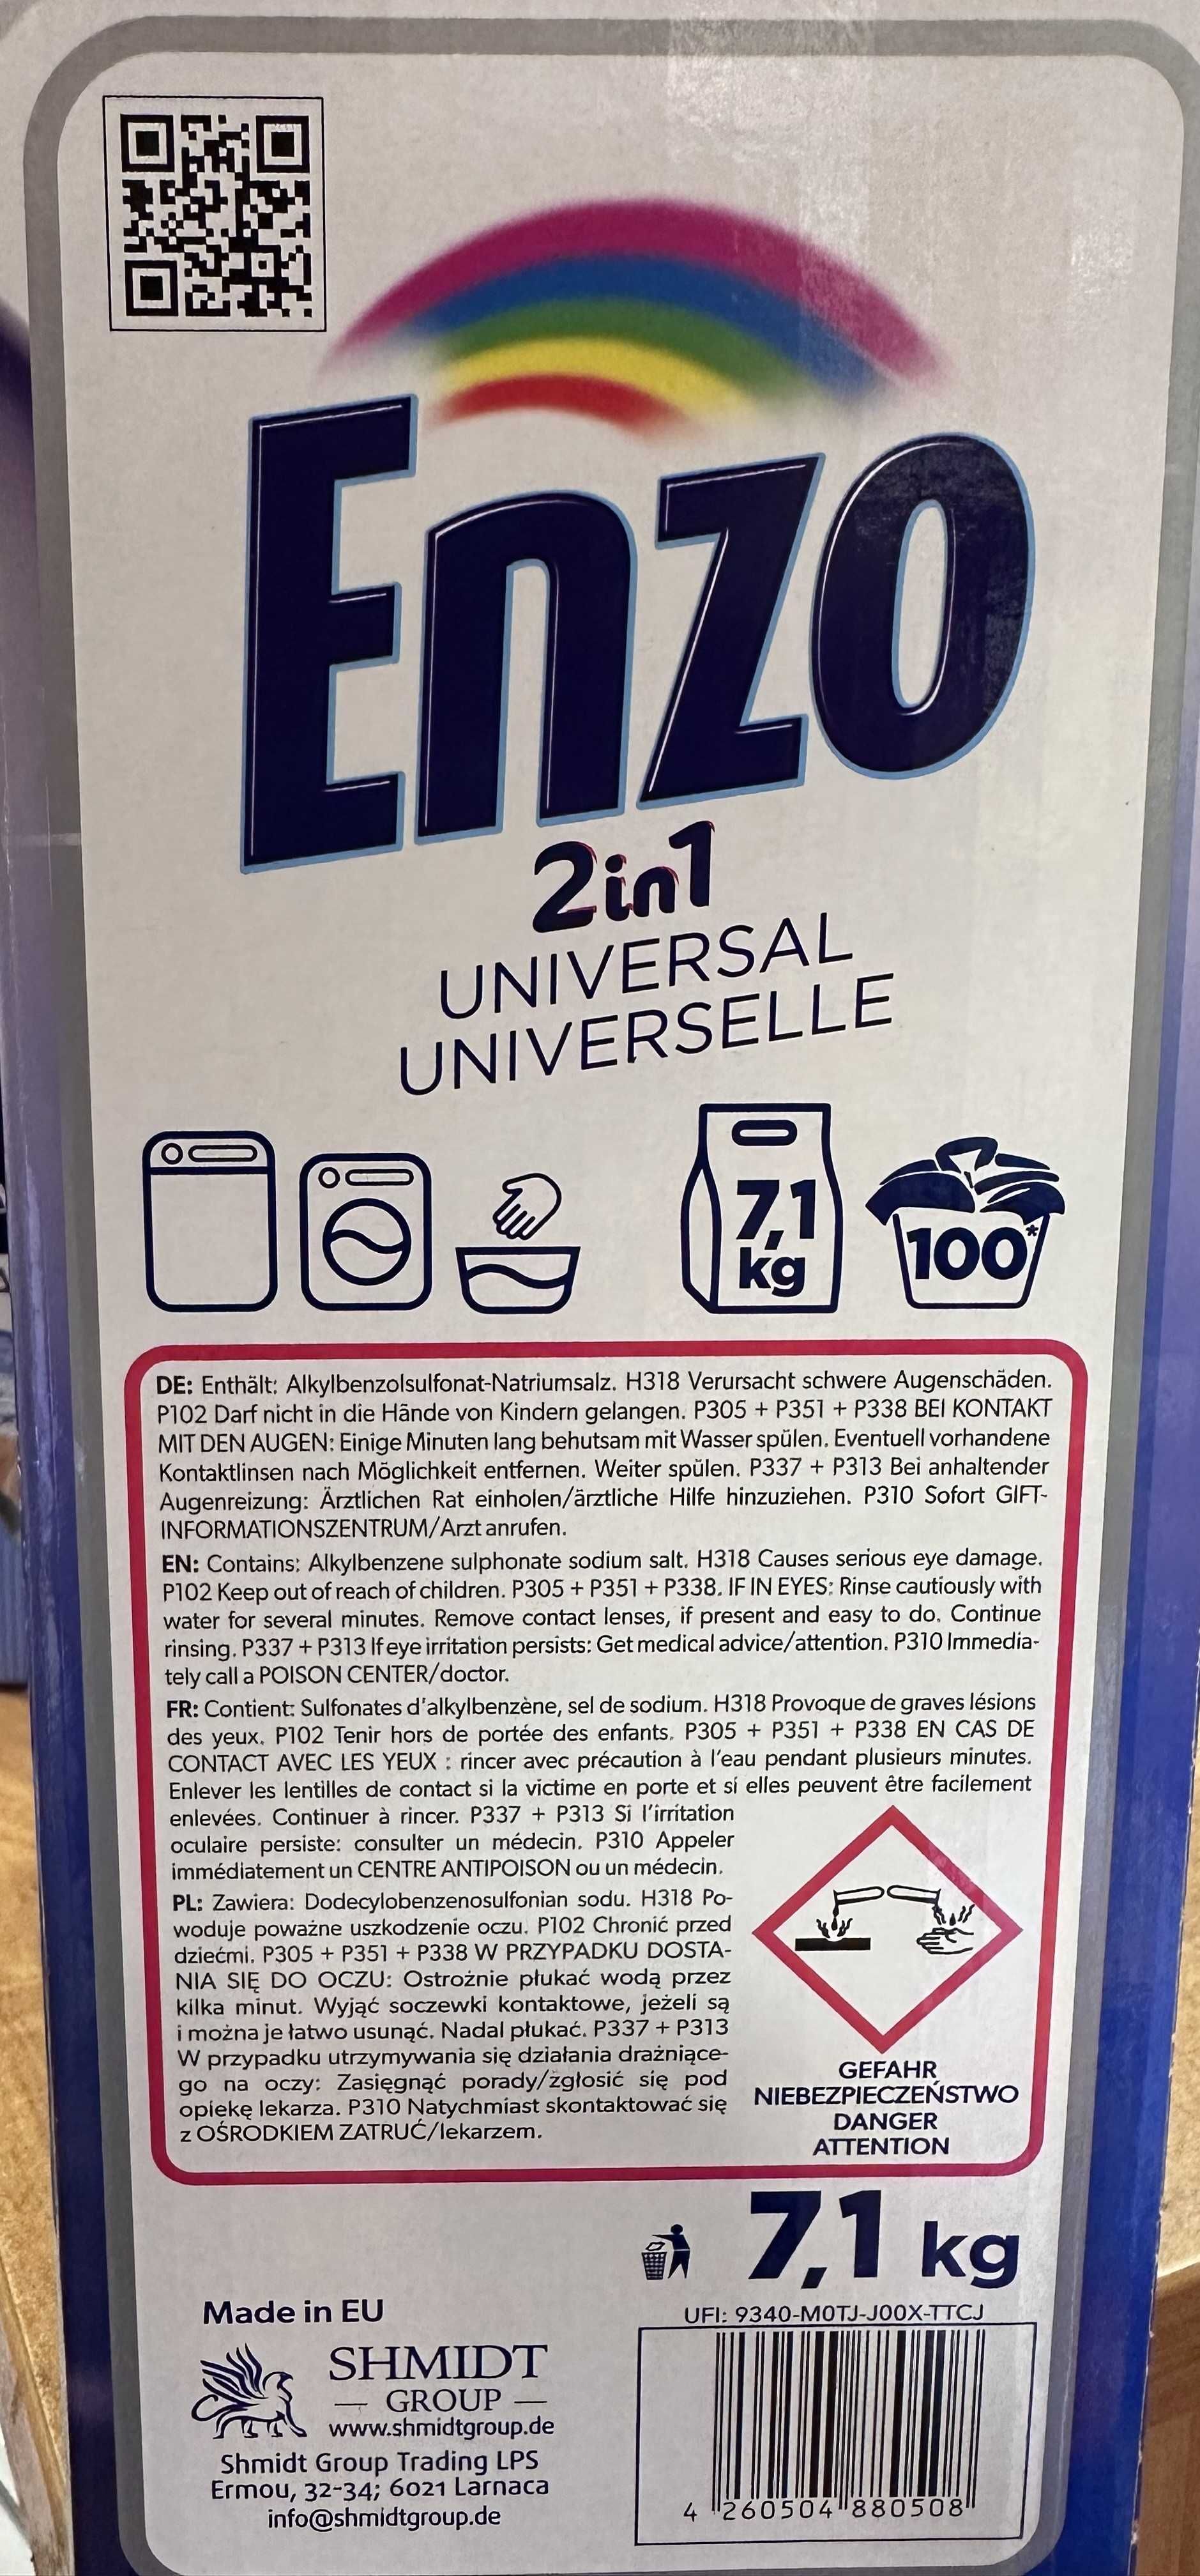 Proszek do prania Enzo Deluxe Universal 7,1kg niemiecki